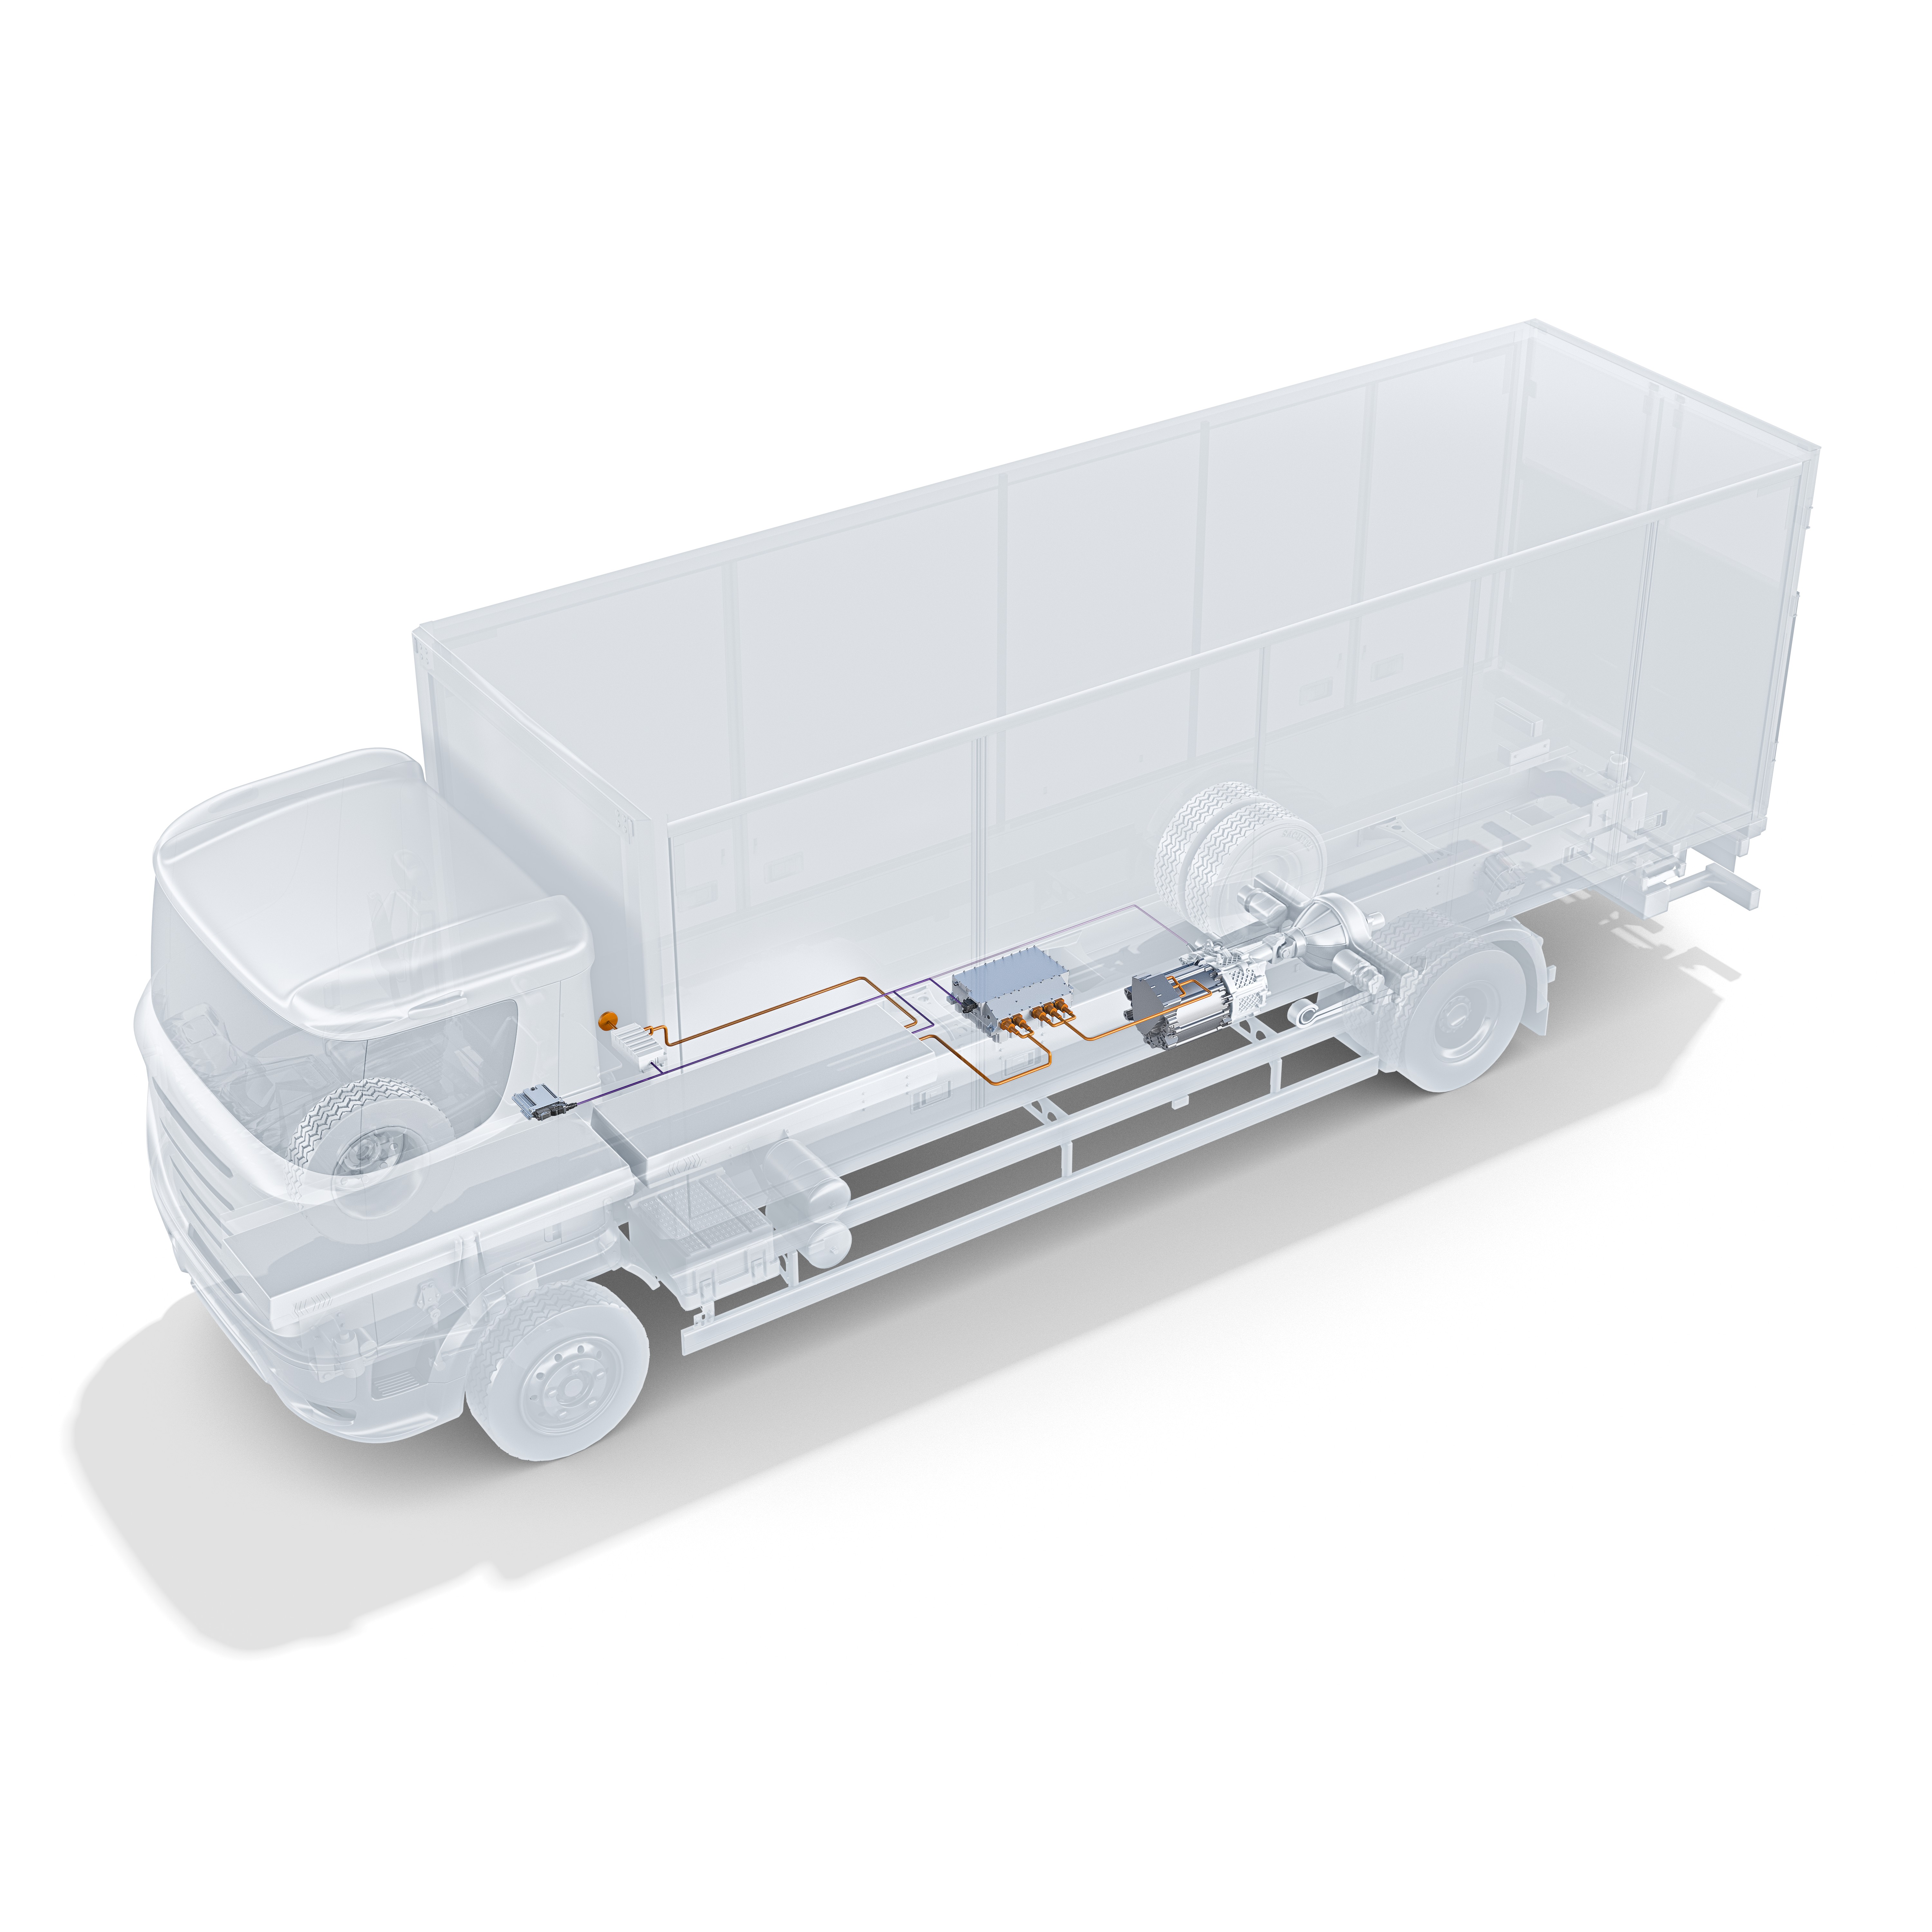 eRegioTruck powertrain solutions from Bosch